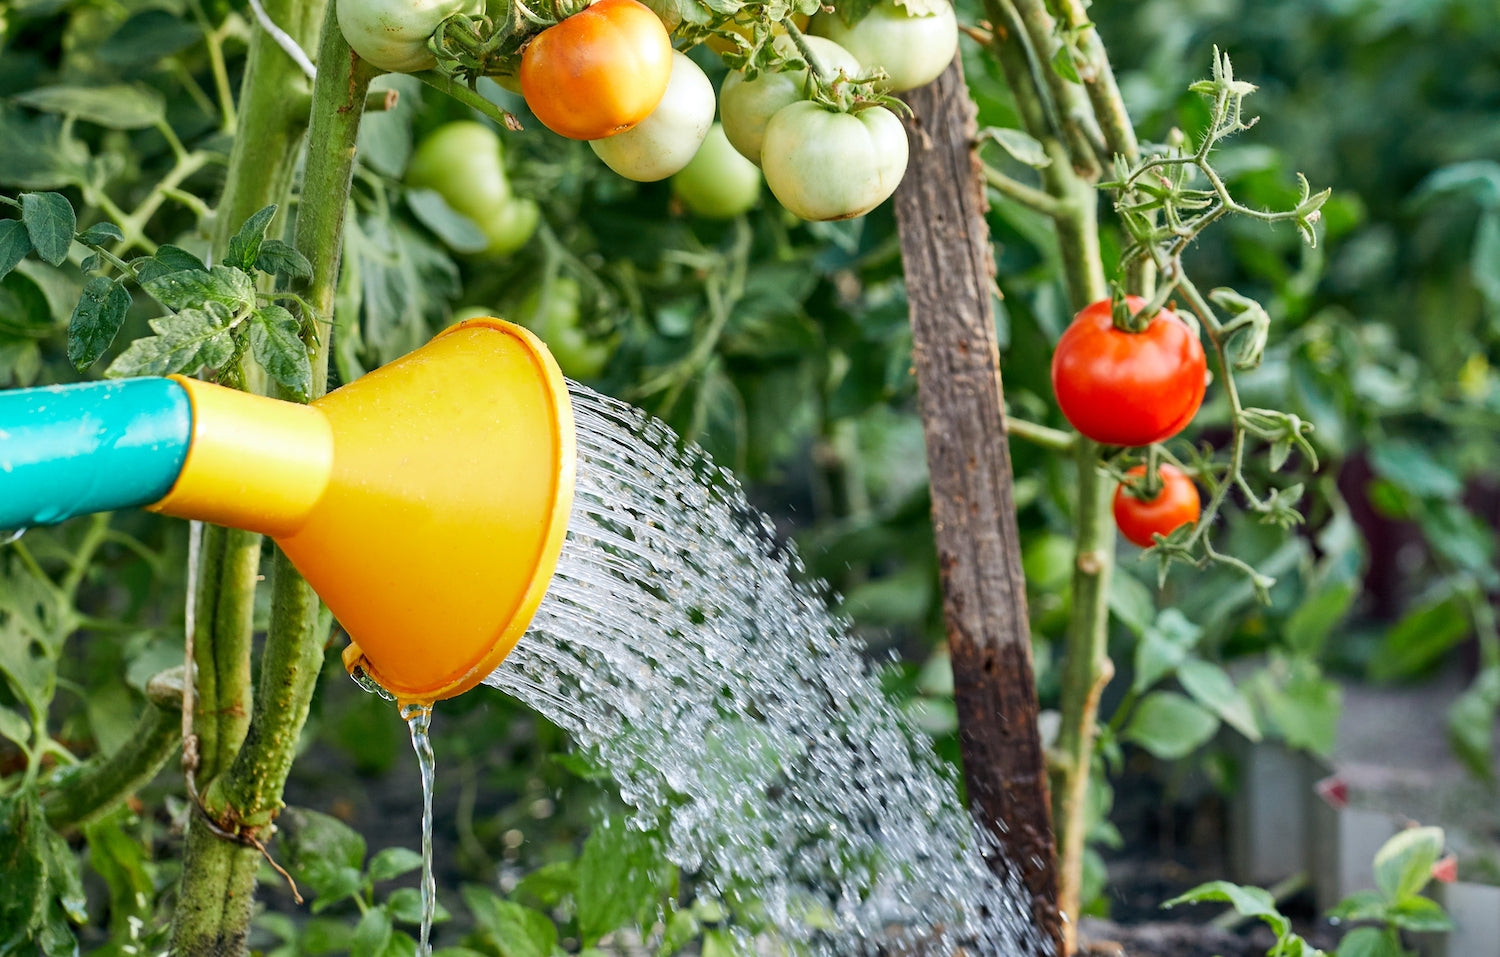 Watering tomatoes